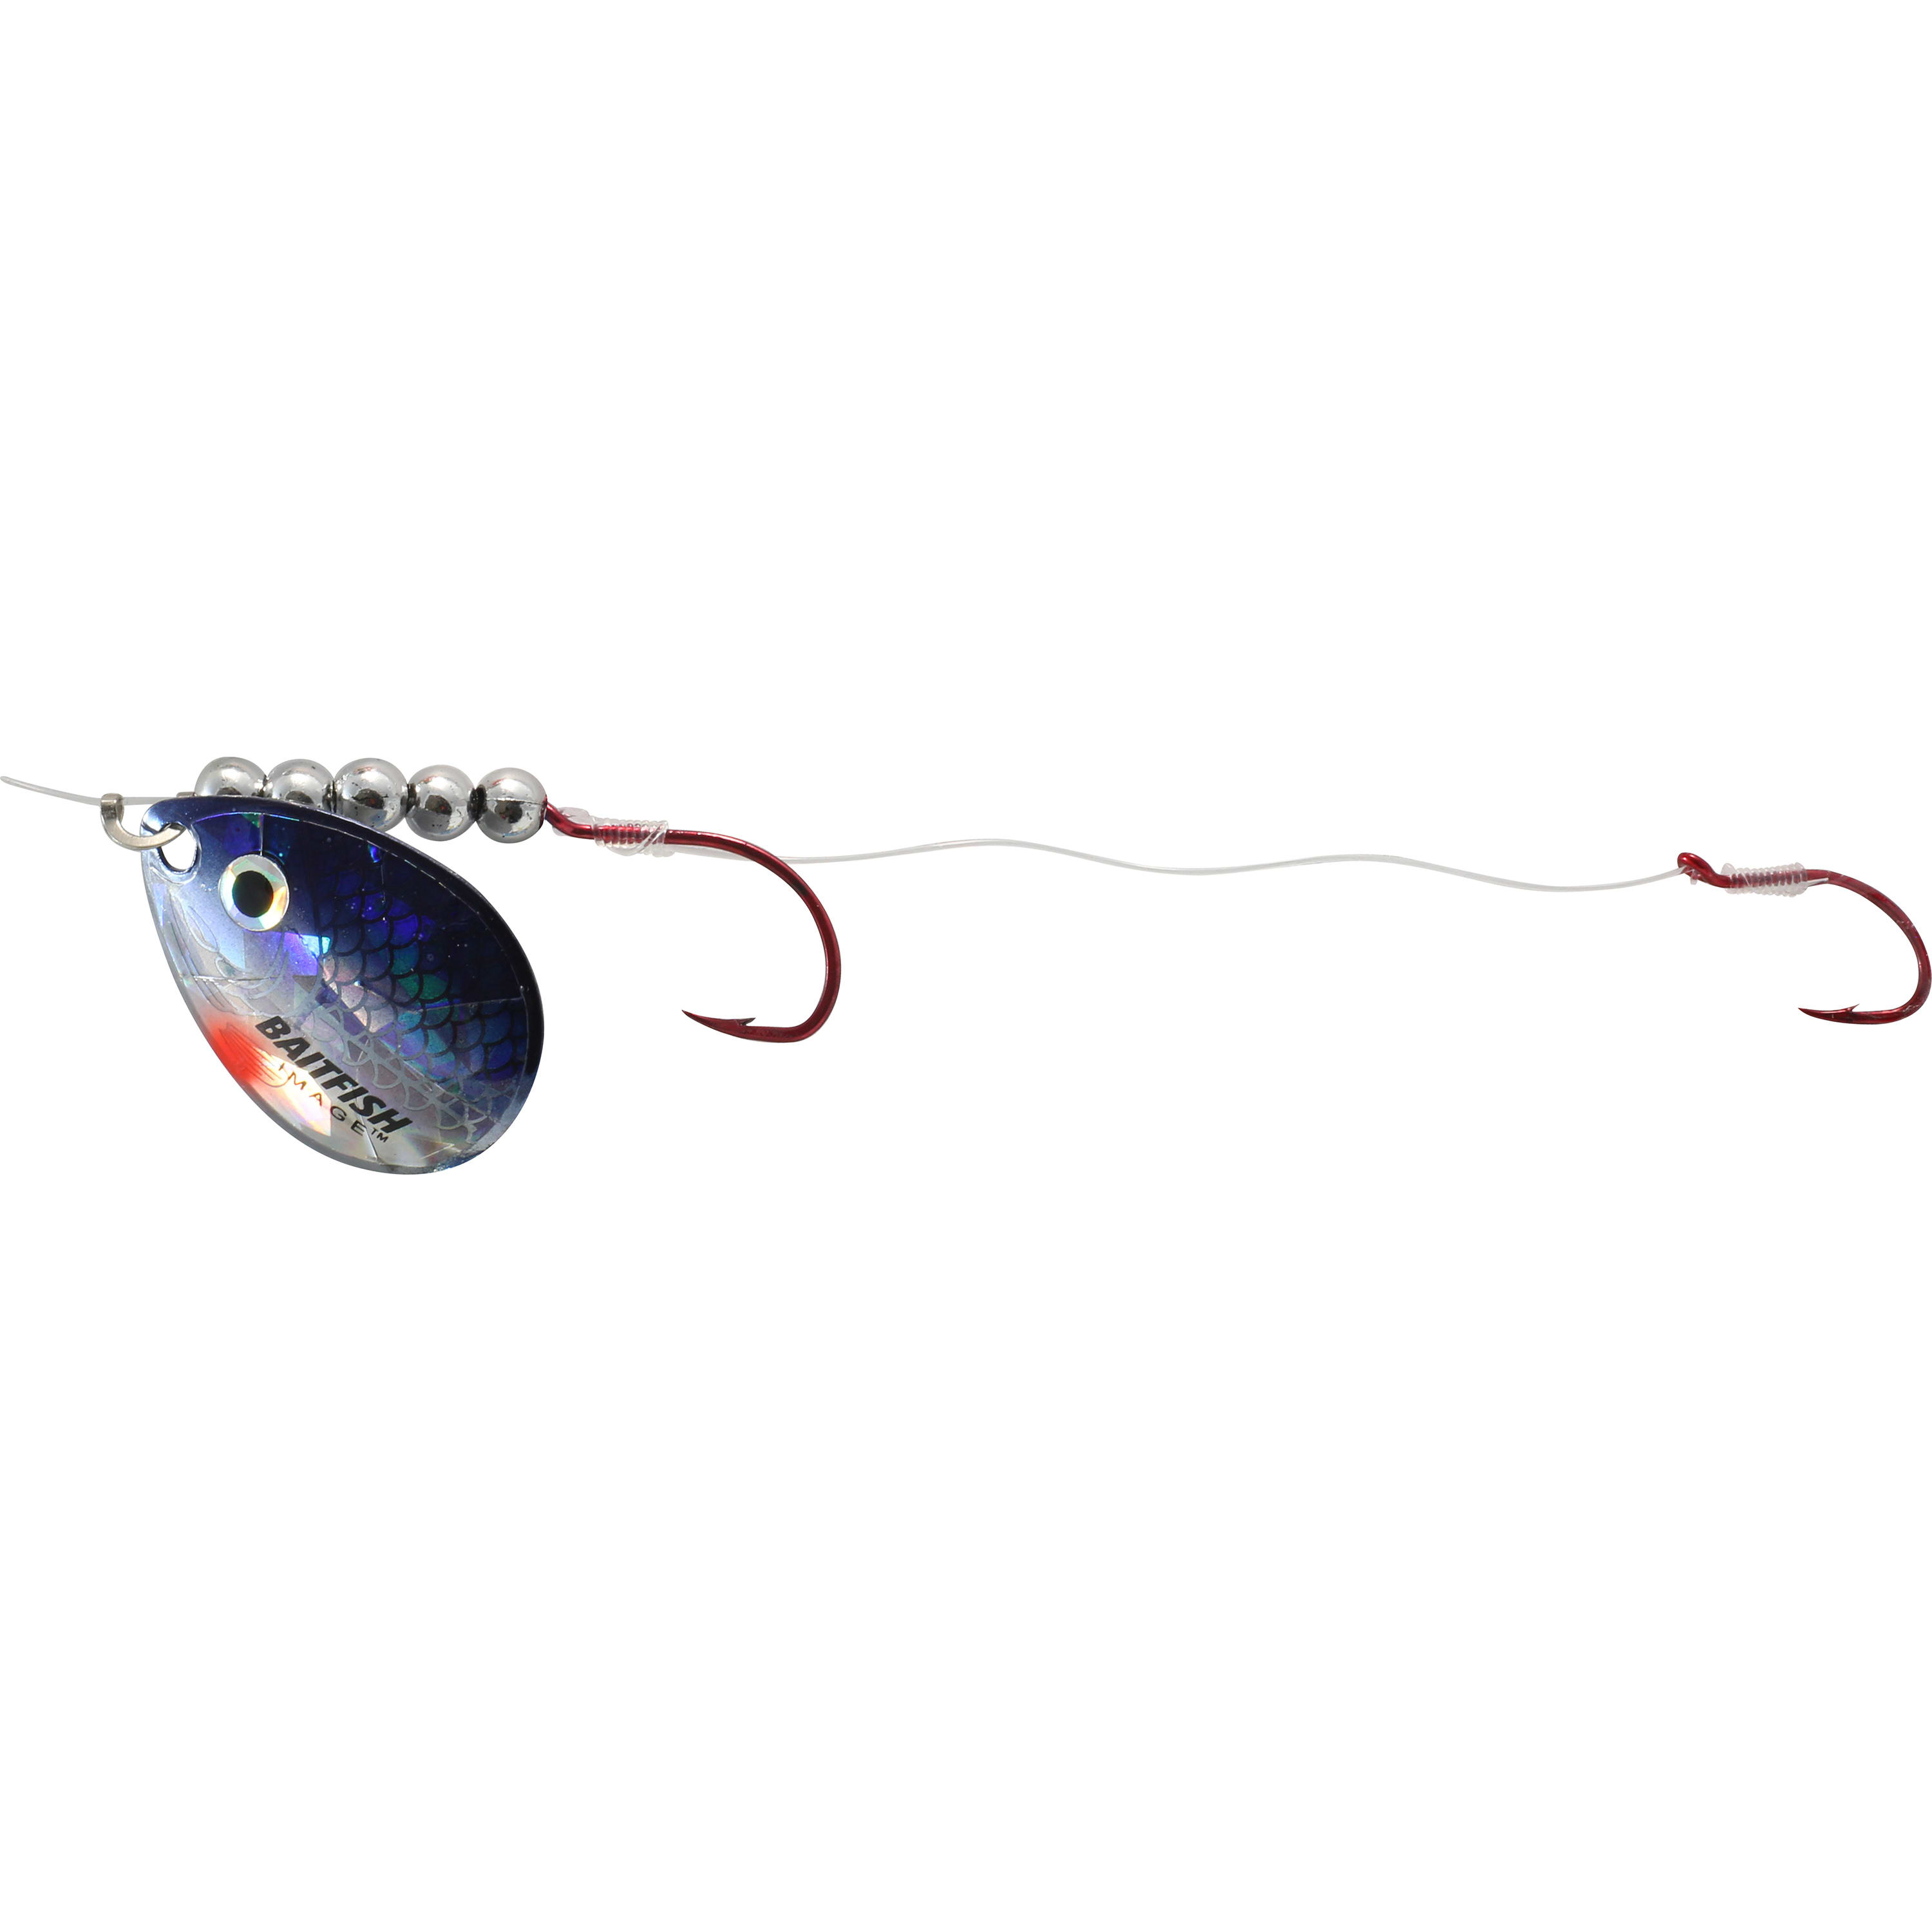 Northland Baitfish Spinner Harness Holographic